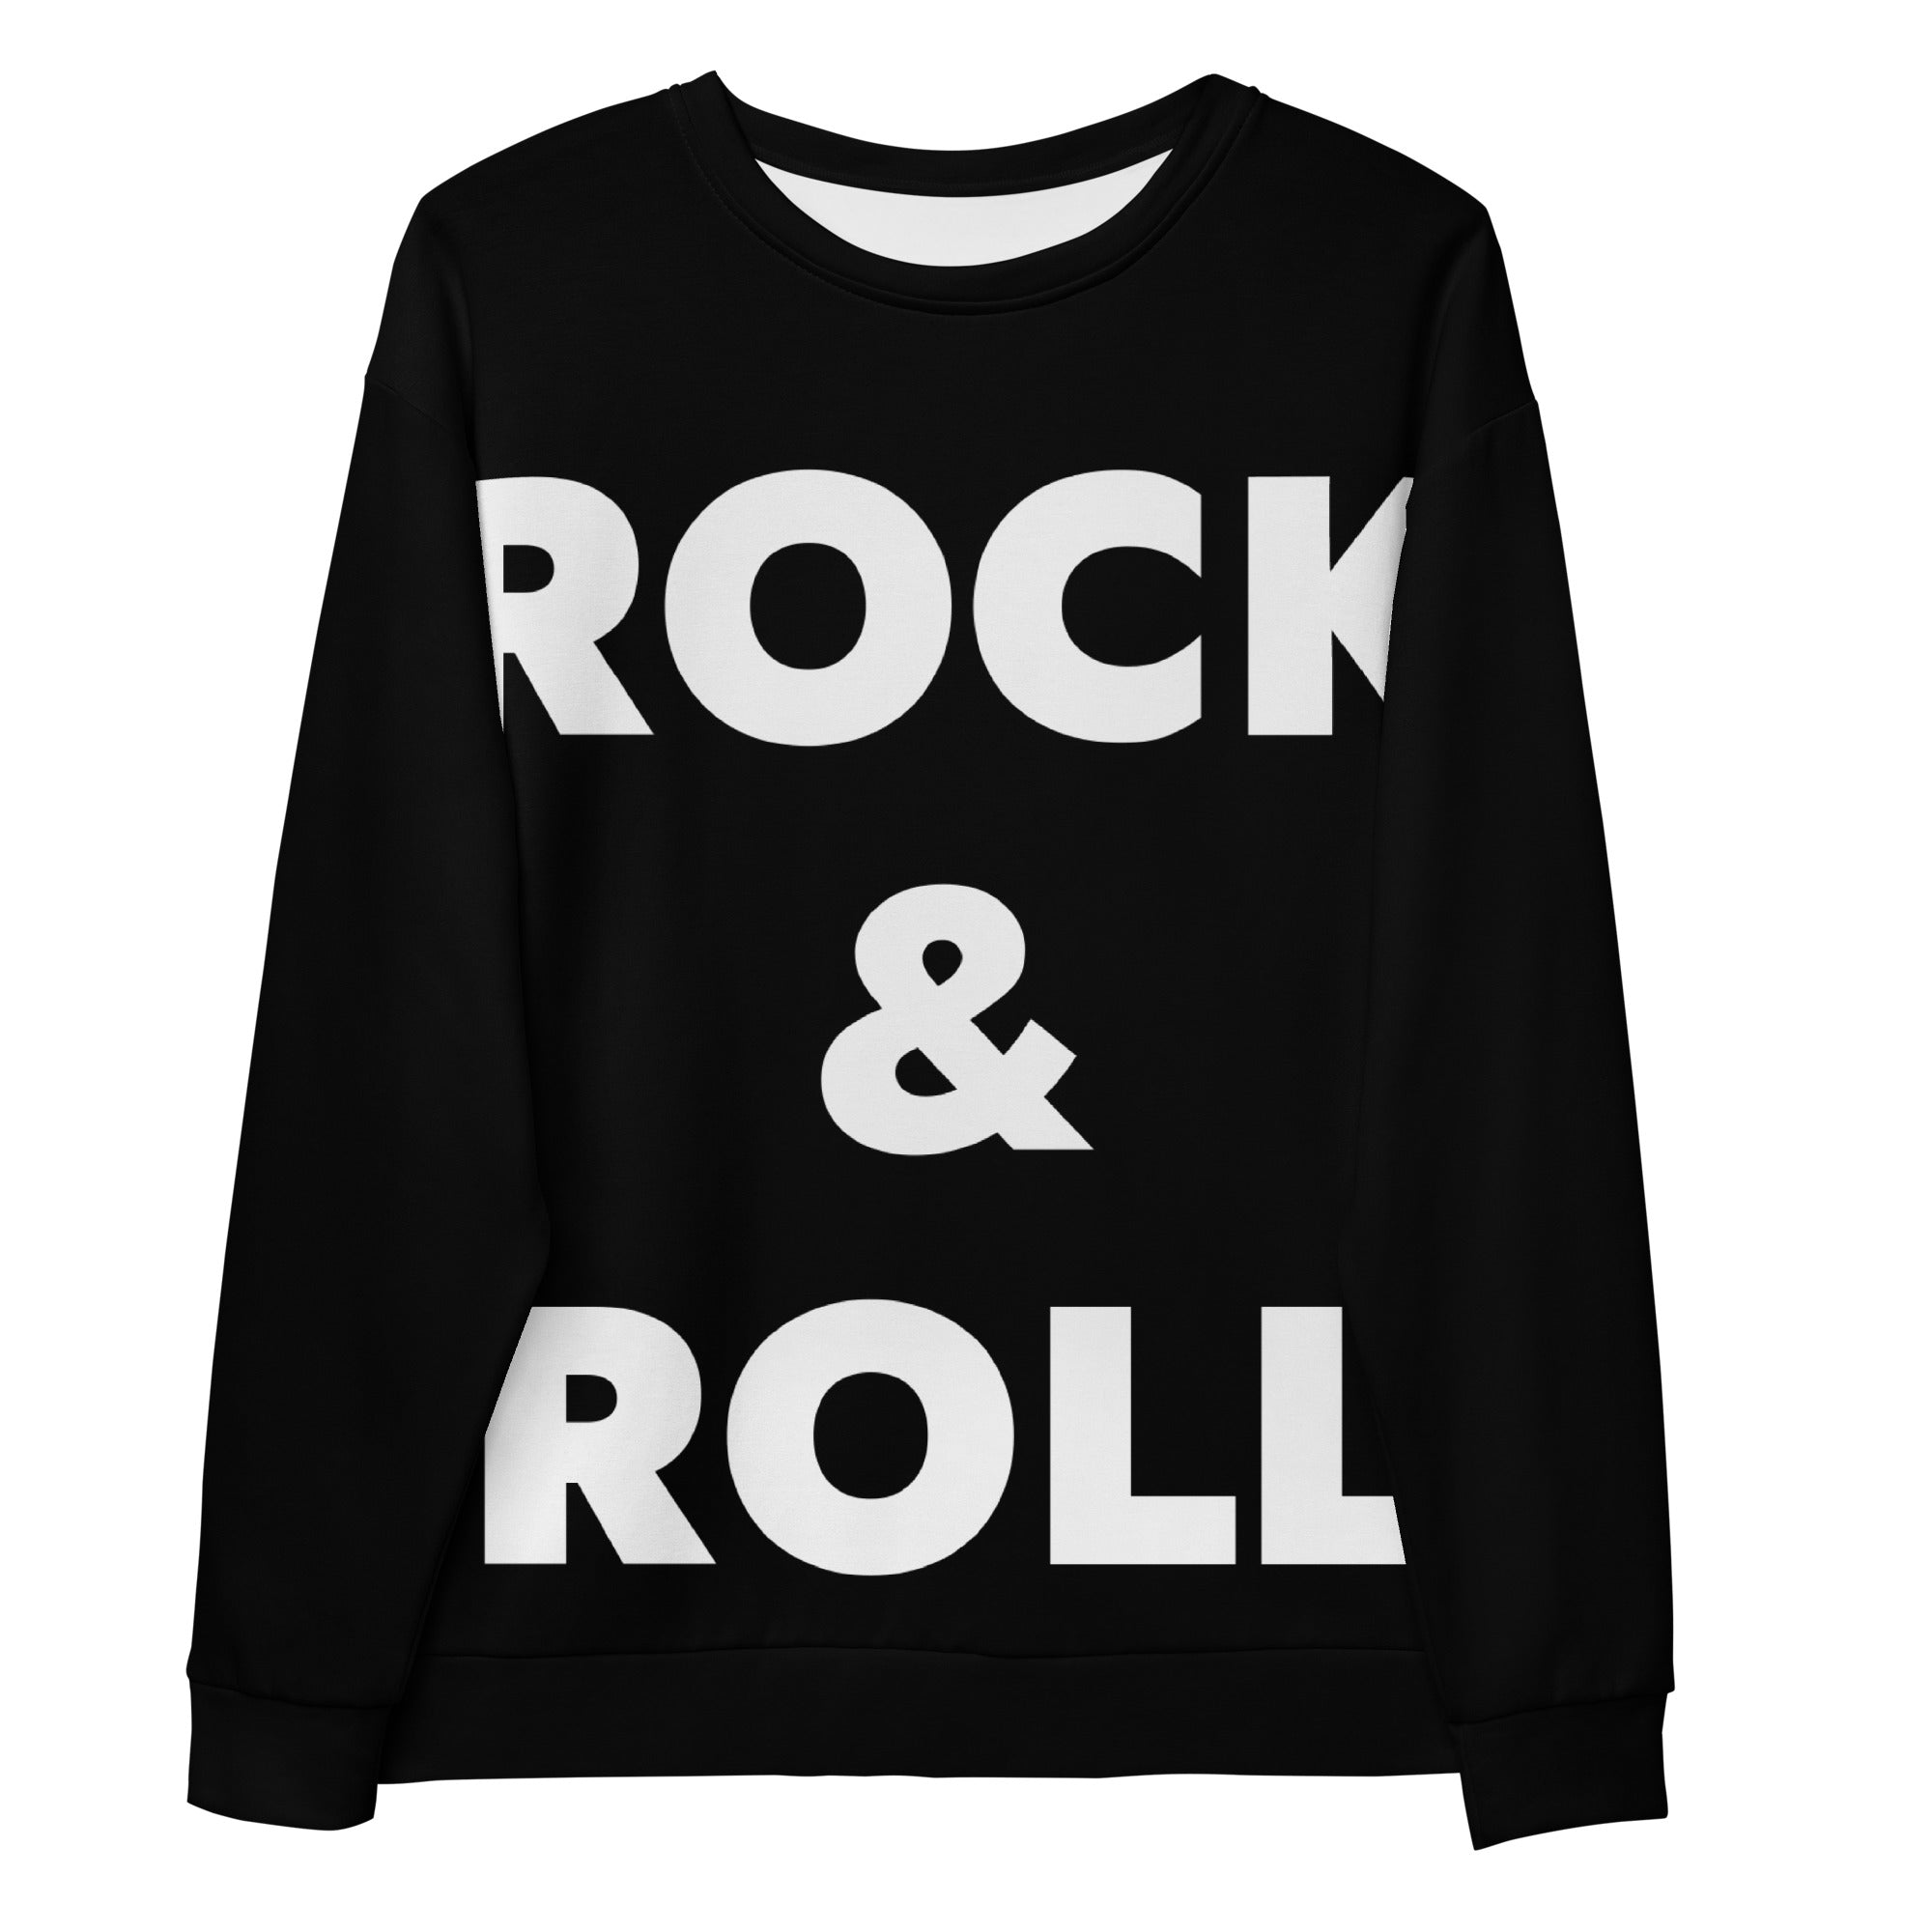 Rock & Roll Maxi Typography Printed Unisex Sweatshirt